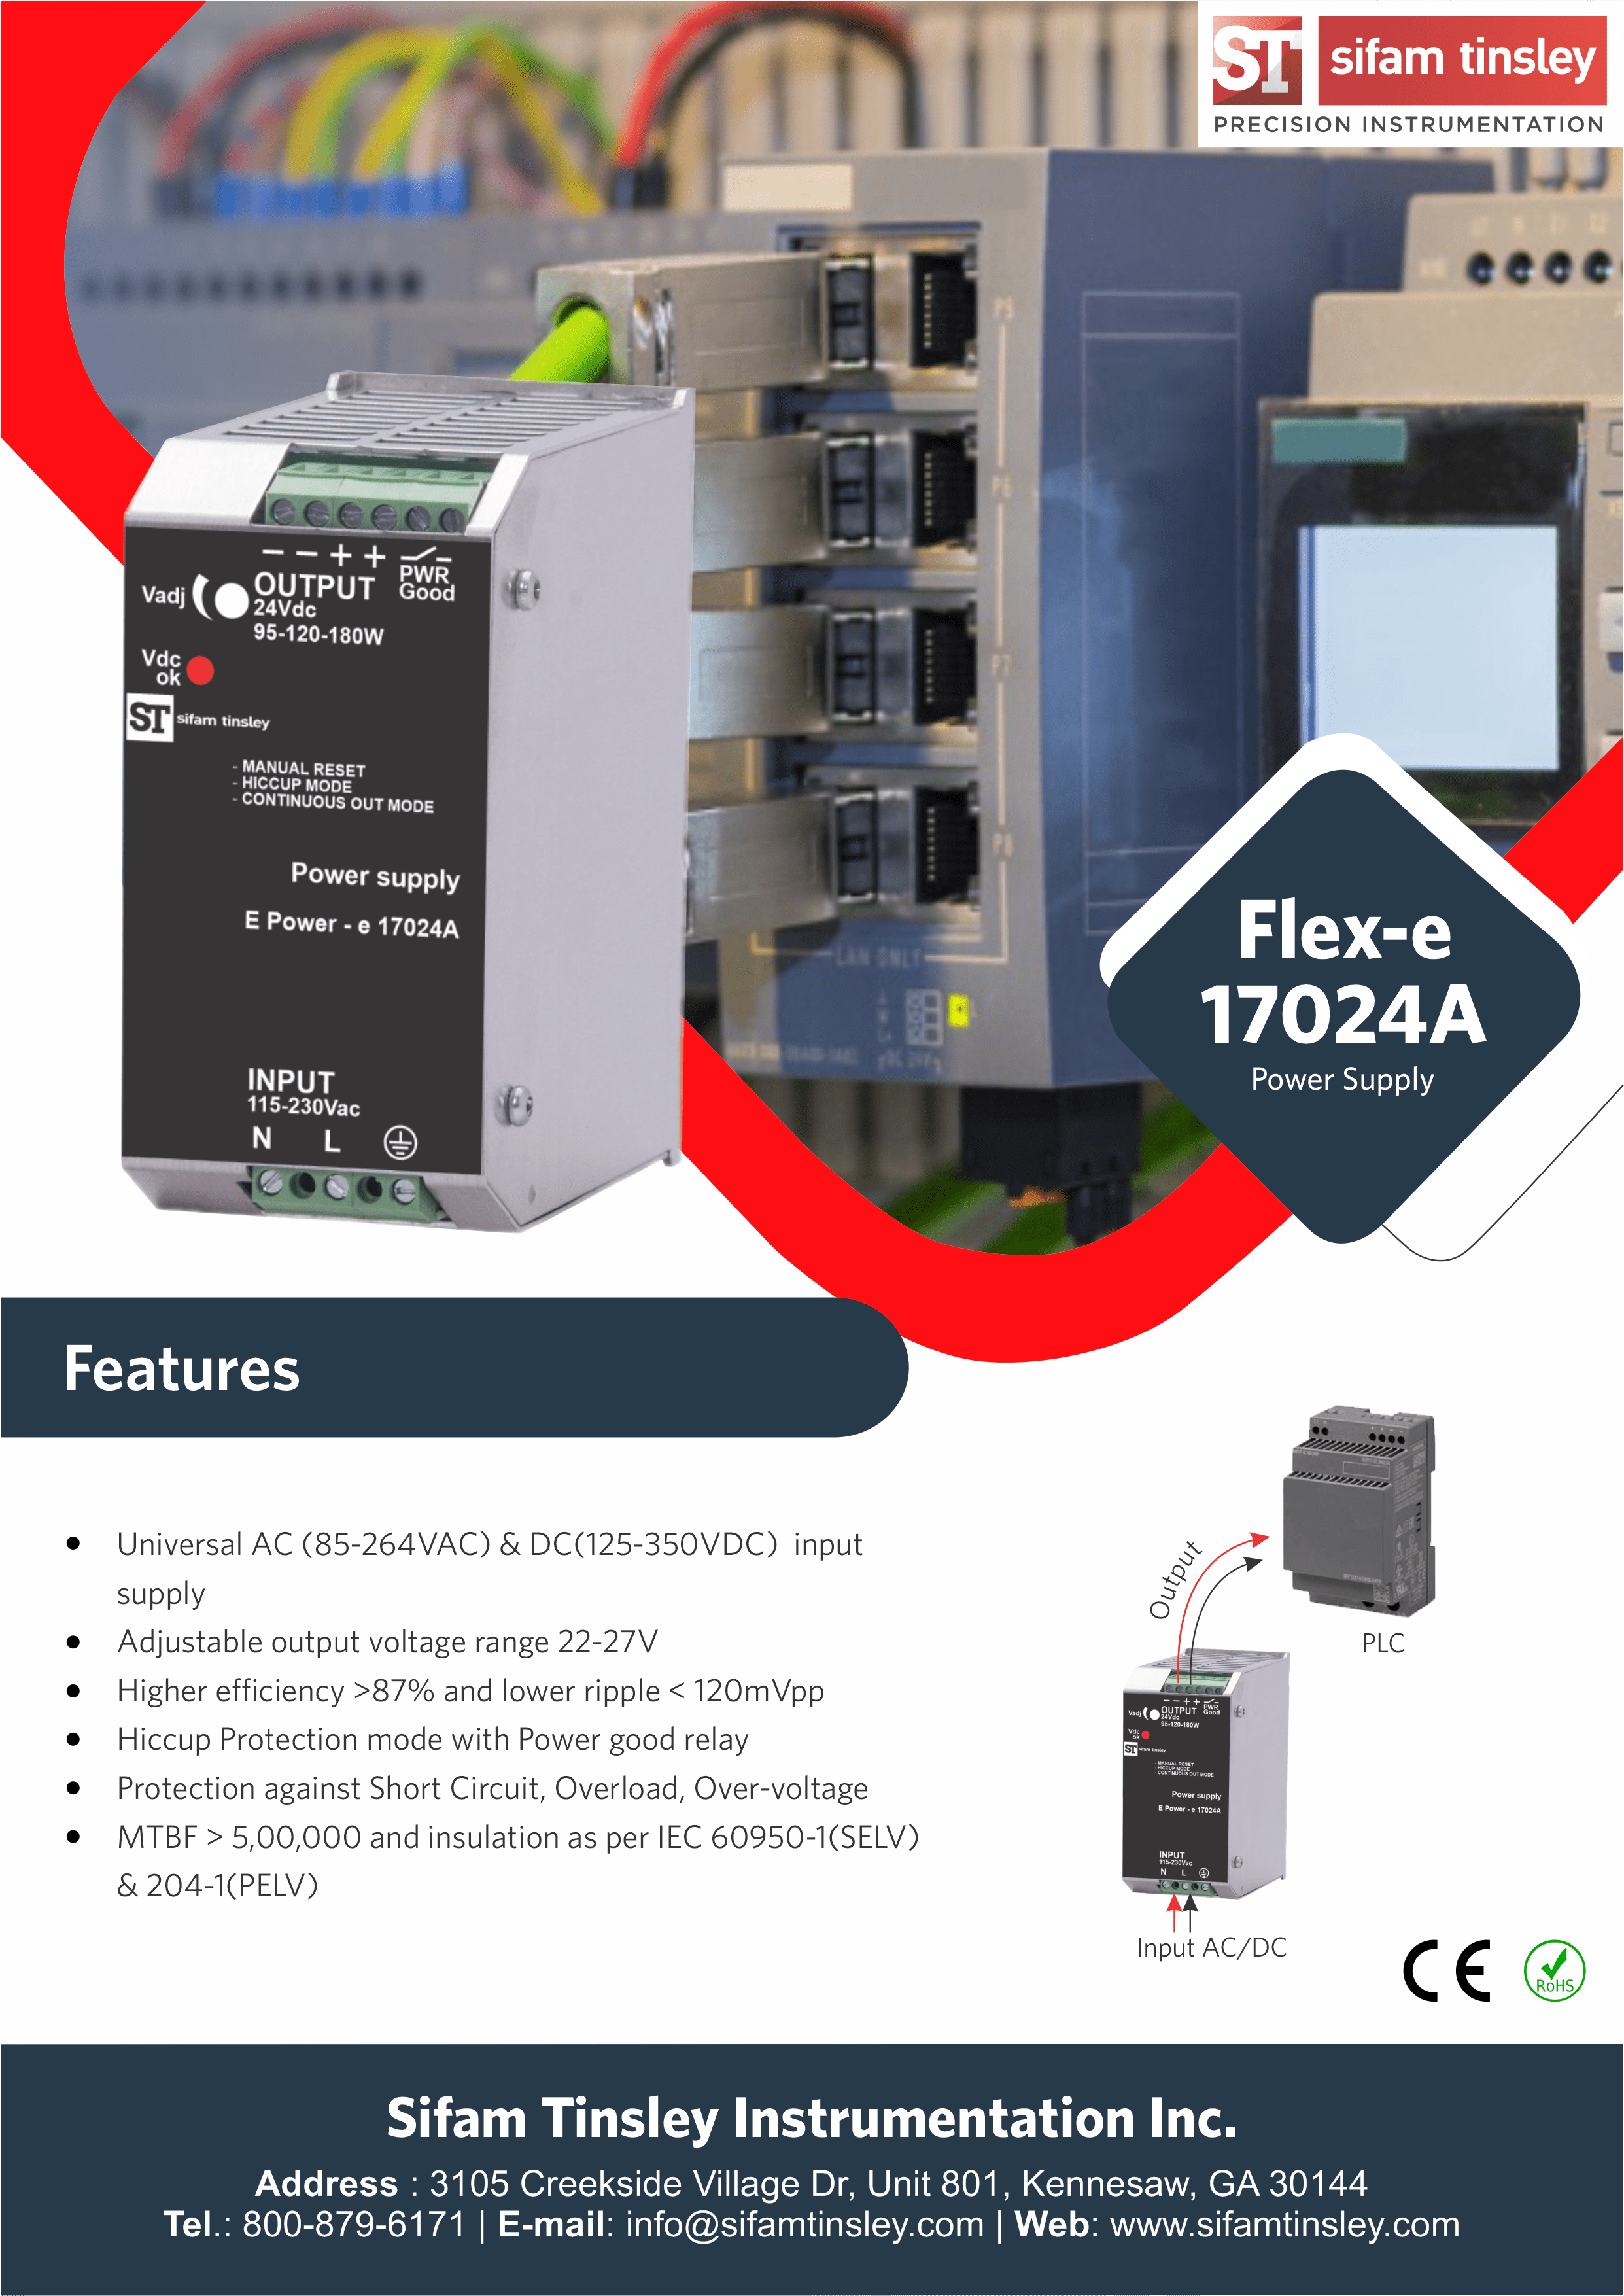 Flex-e 17024A 